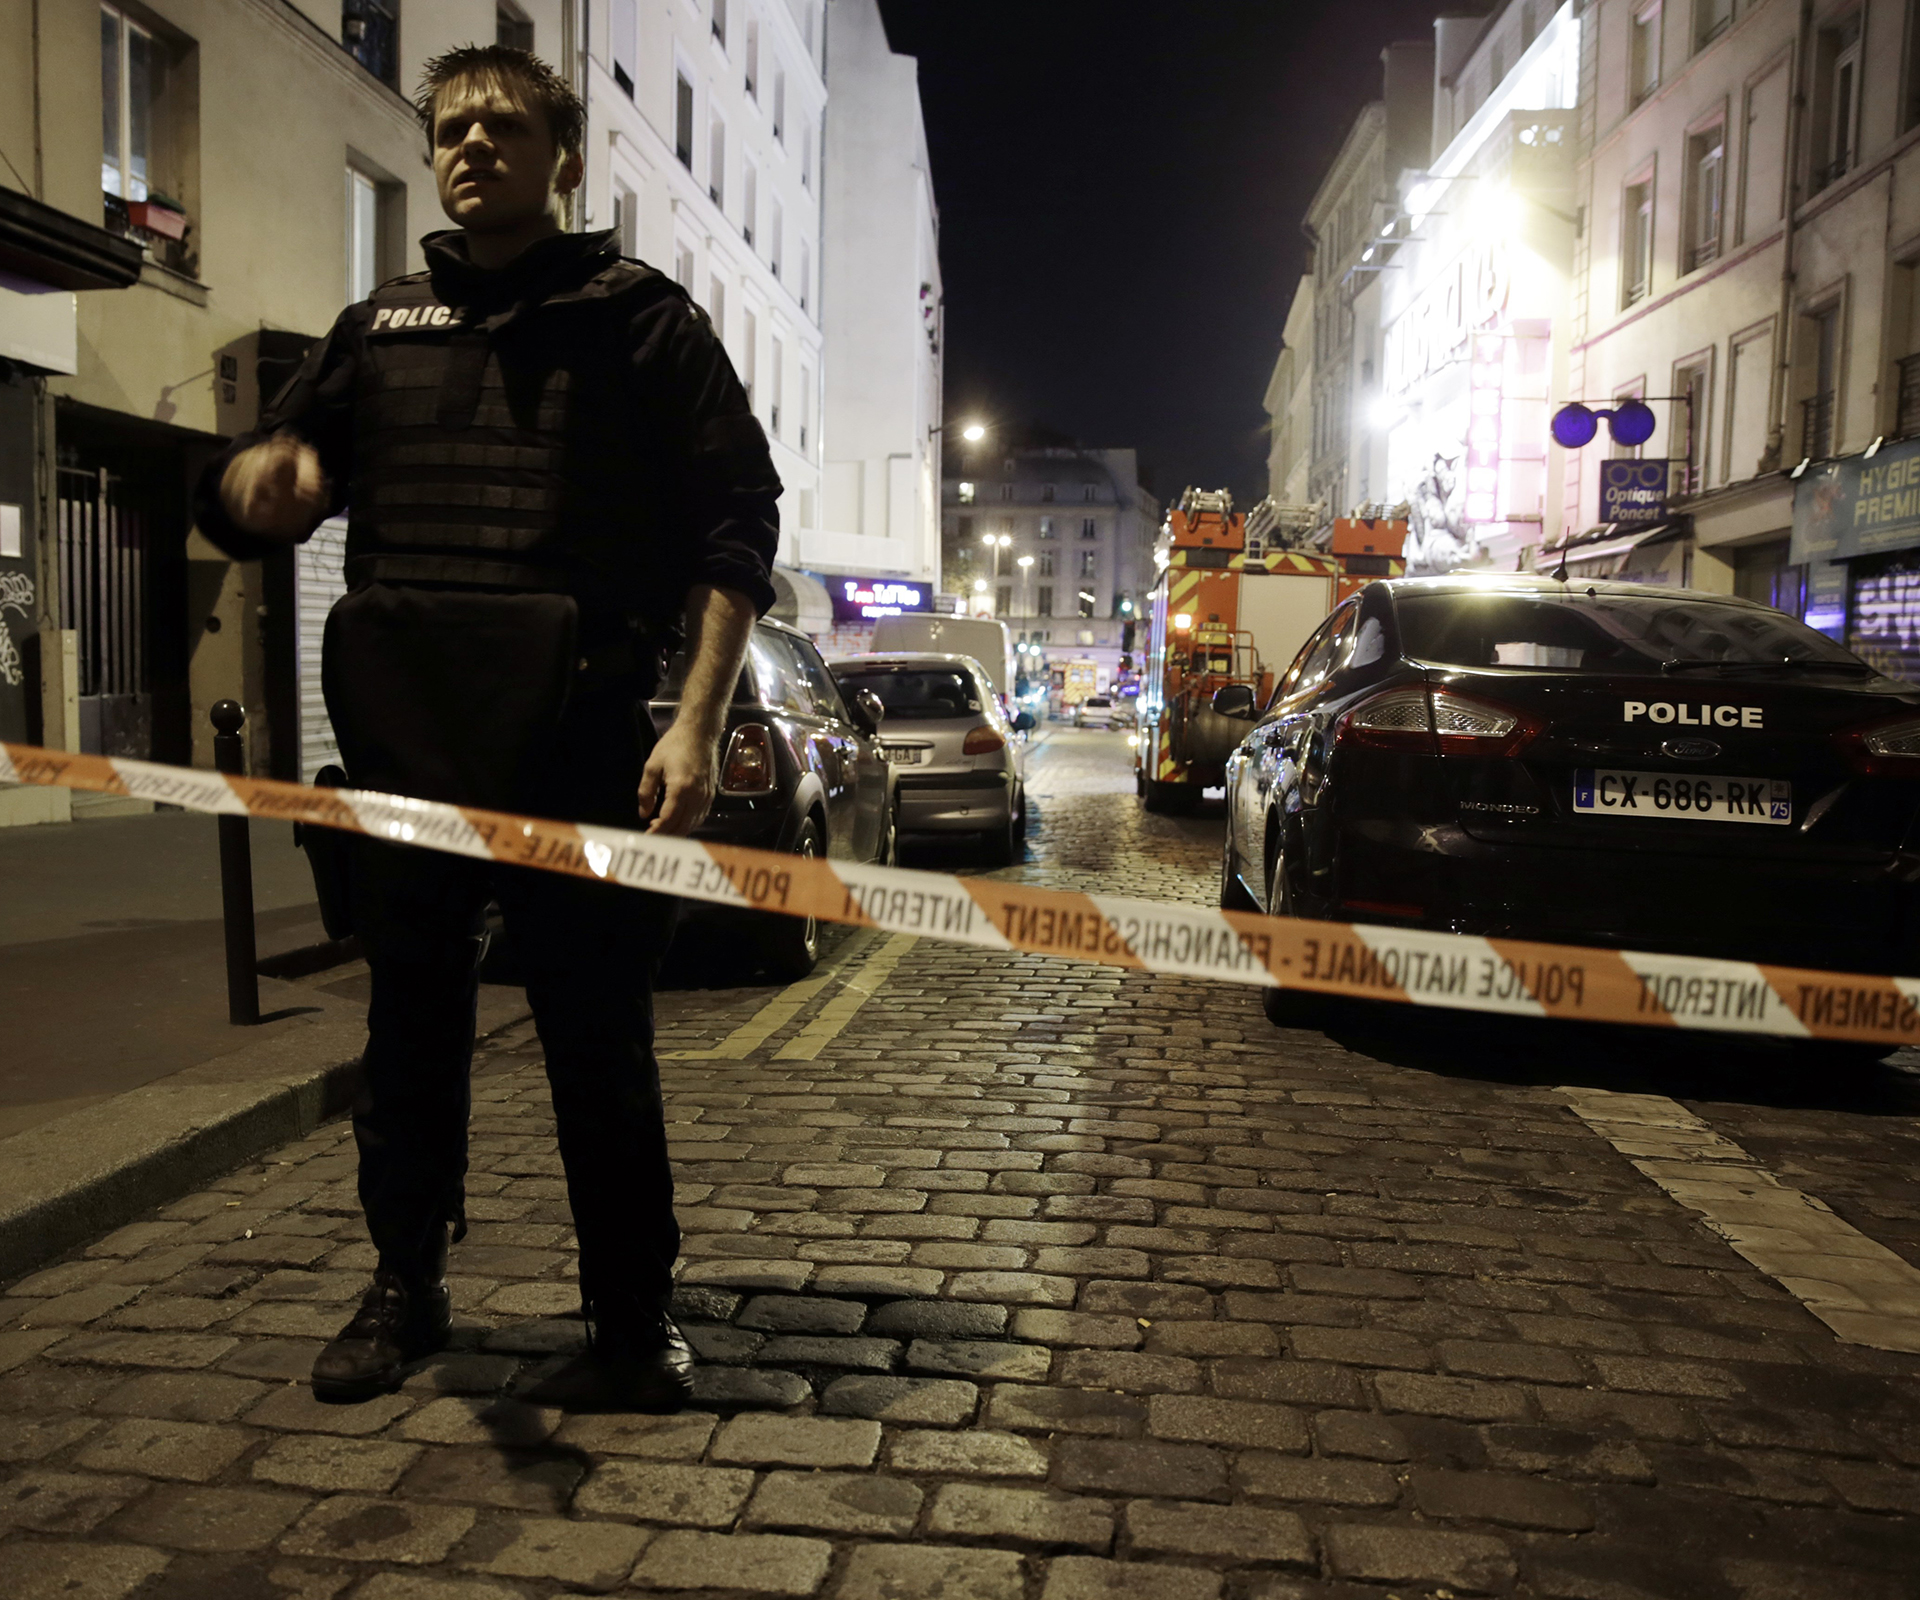 “It’s a massacre:” More than 140 killed in Paris terrorist attacks